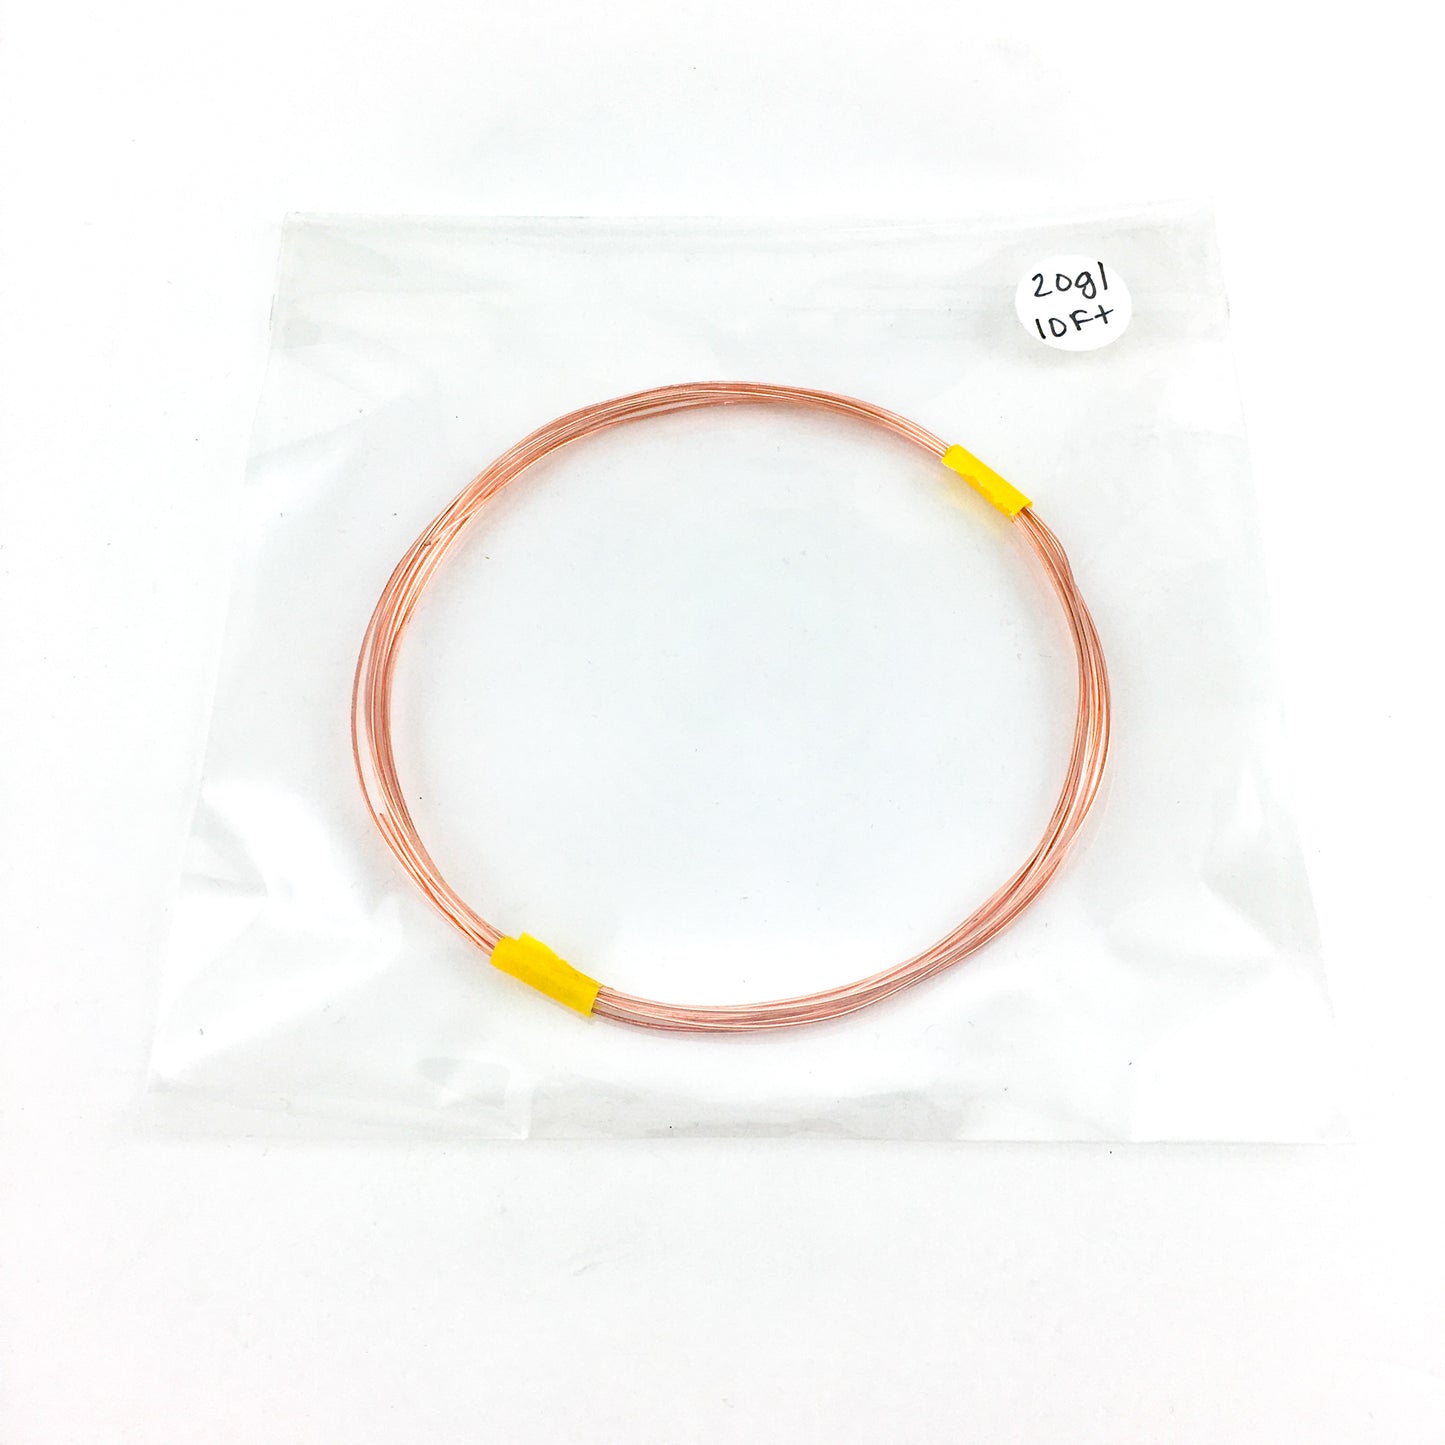 Round Copper Wire - Soft Temper a.k.a. Dead Soft - 10 ft. - 20g by Contenti - K. A. Artist Shop